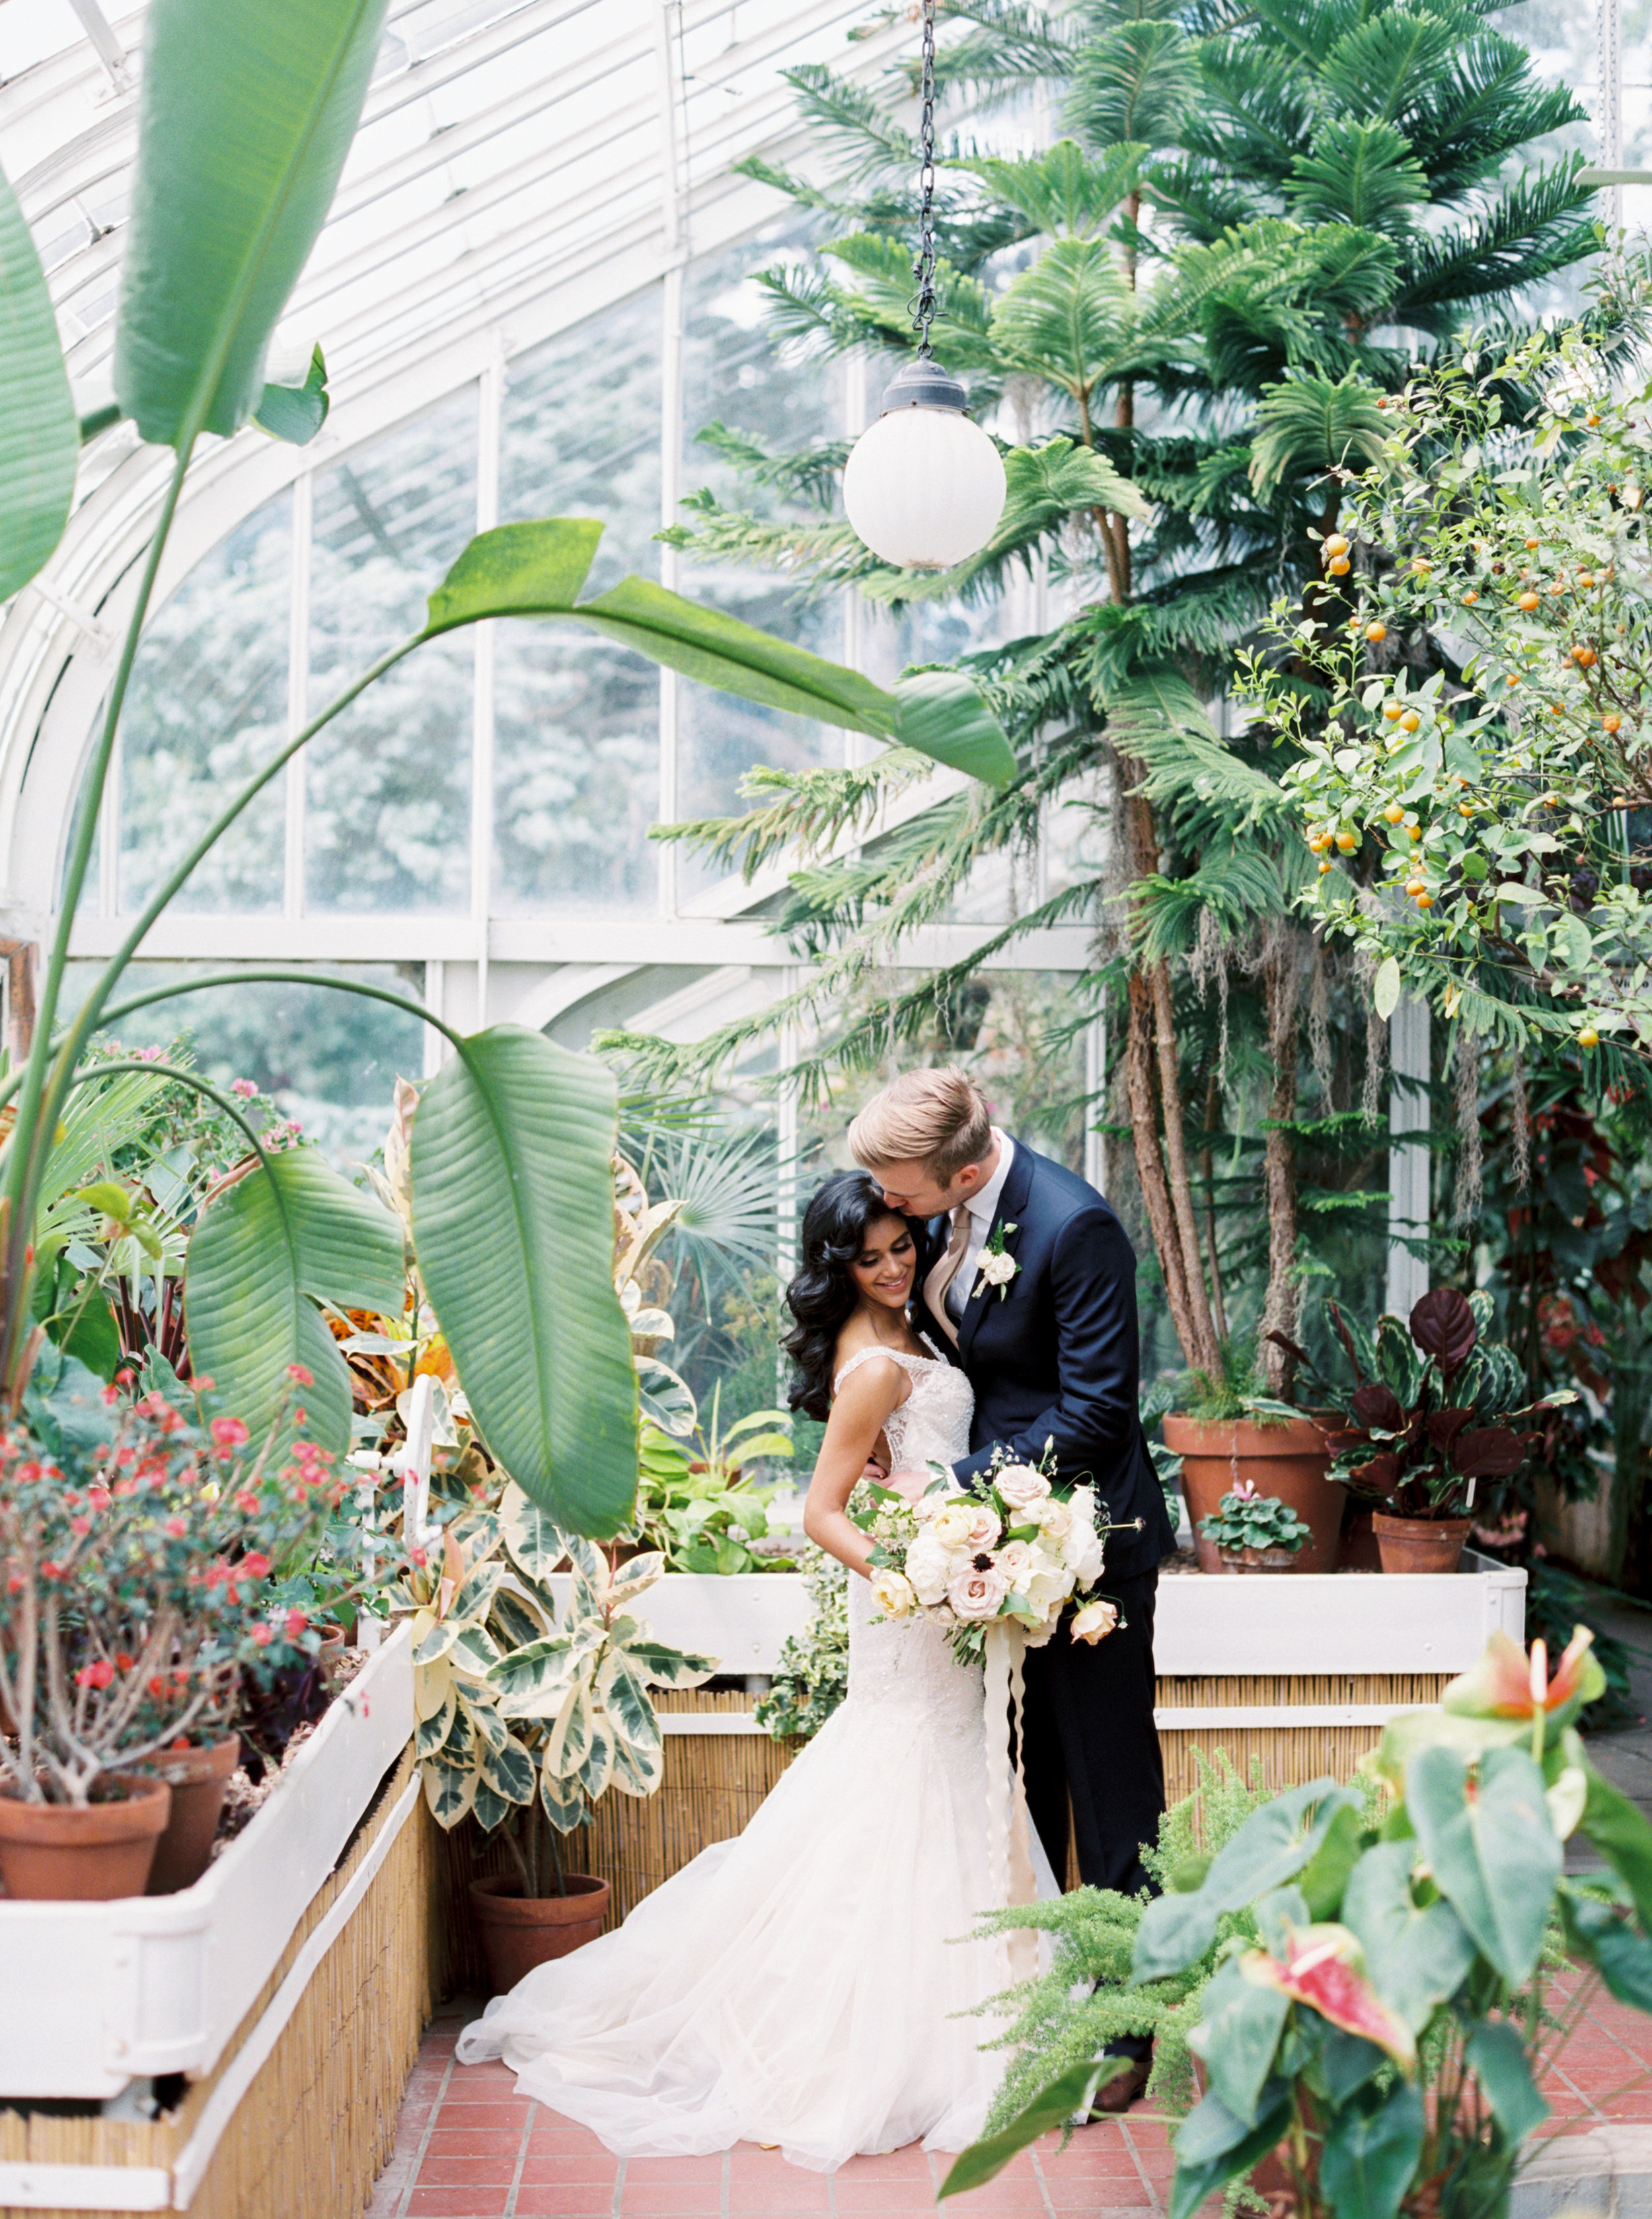 Senushi And Ryan Interfaith Wedding At The Tulsa Garden Center